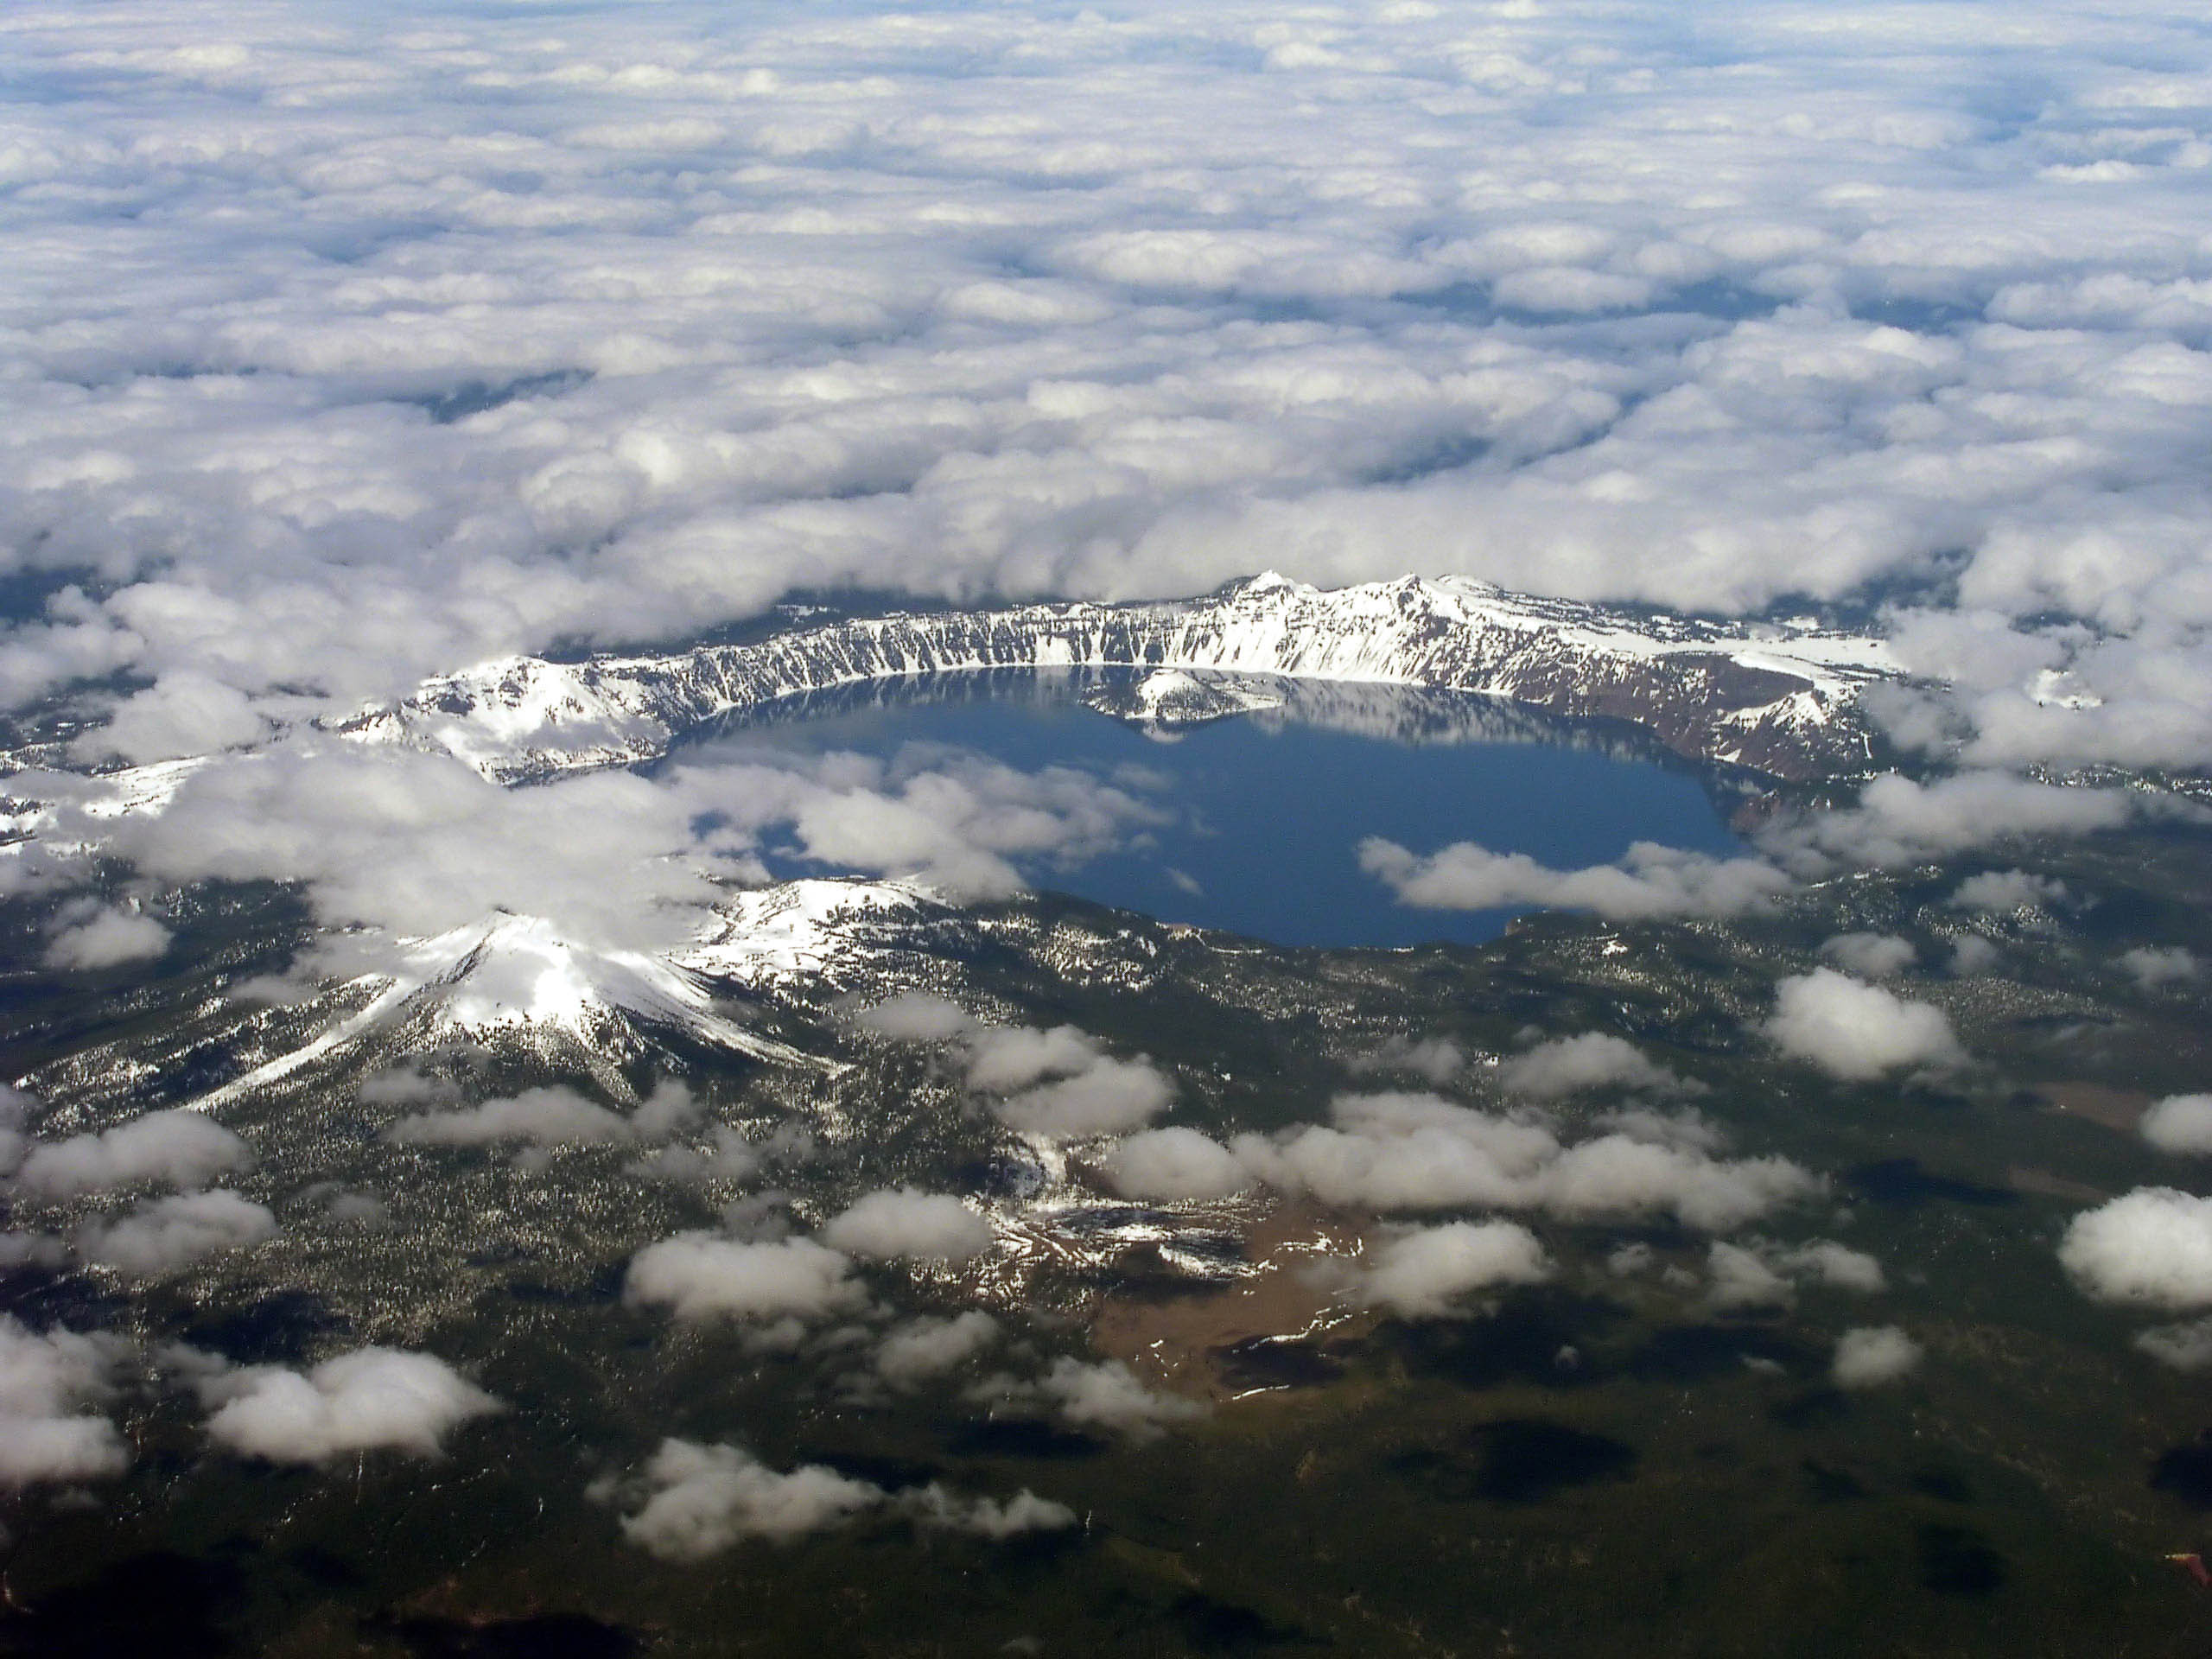 Letecký pohled na Crater Lake v kaldeře sopky Mount Mazama, GNU Free Documentation License 1.2, Wikimedia Commons